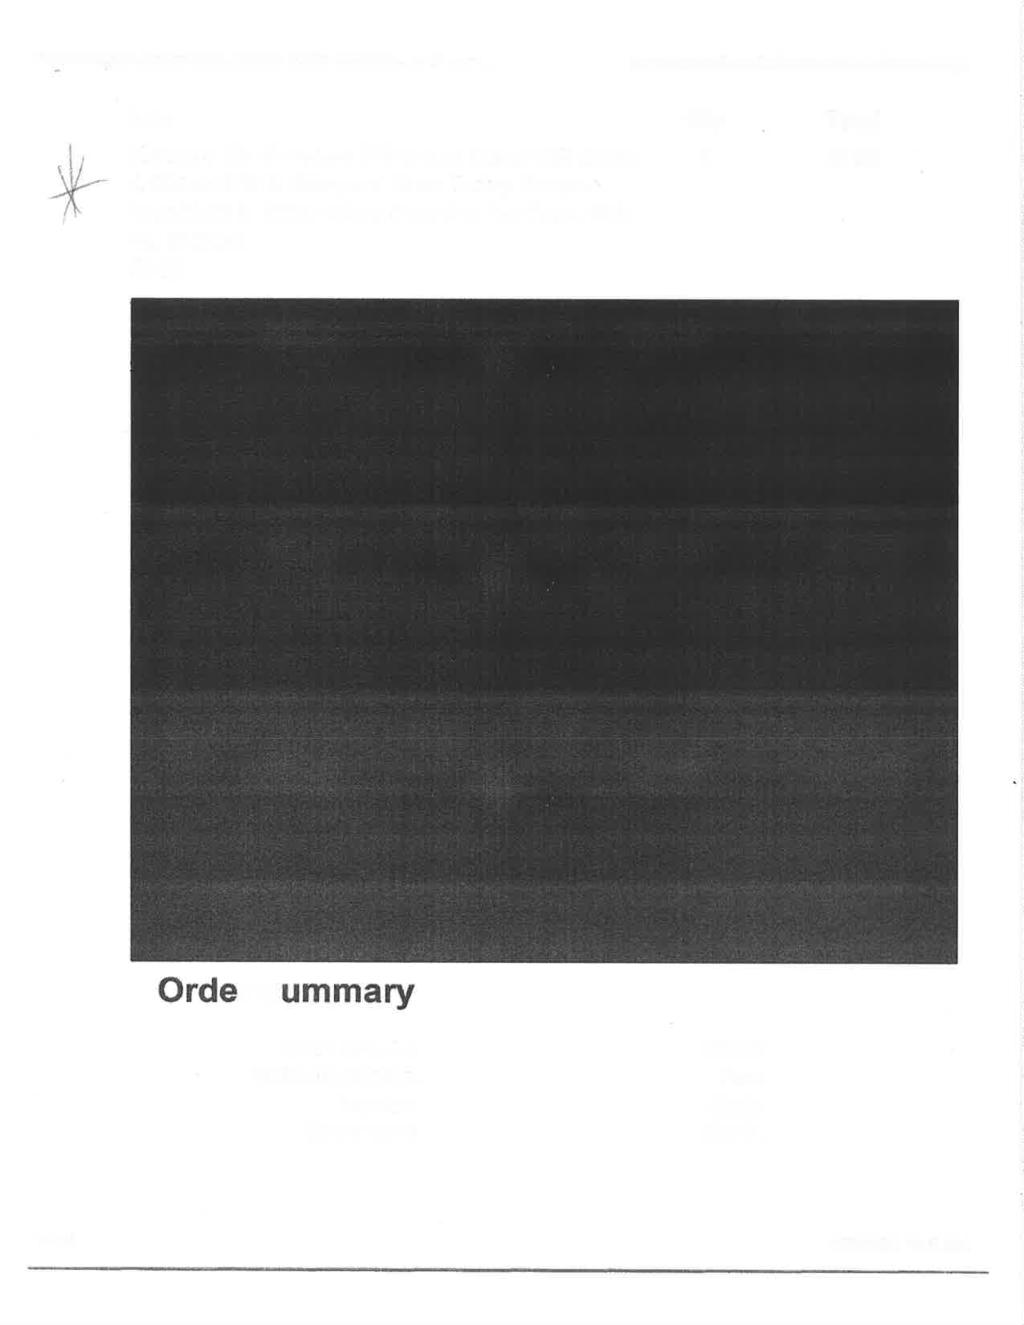 Case 1:18-cv-02345 Document